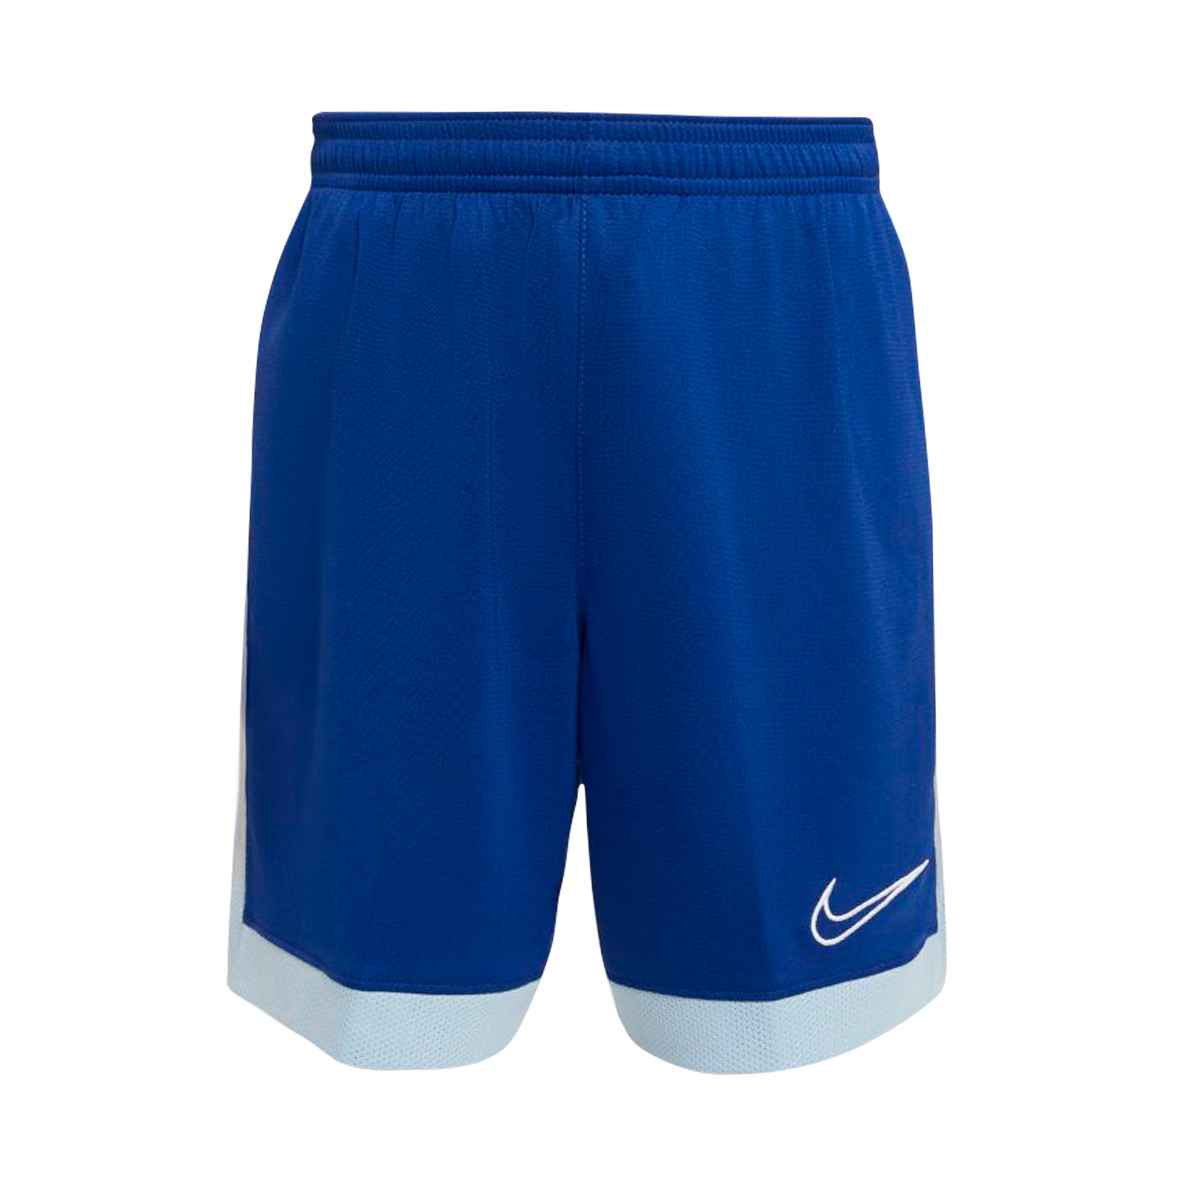 Pantalón corto Nike Dri-FIT Academy Niño Deep royal blue-Lite armory  blue-White - Tienda de fútbol Fútbol Emotion